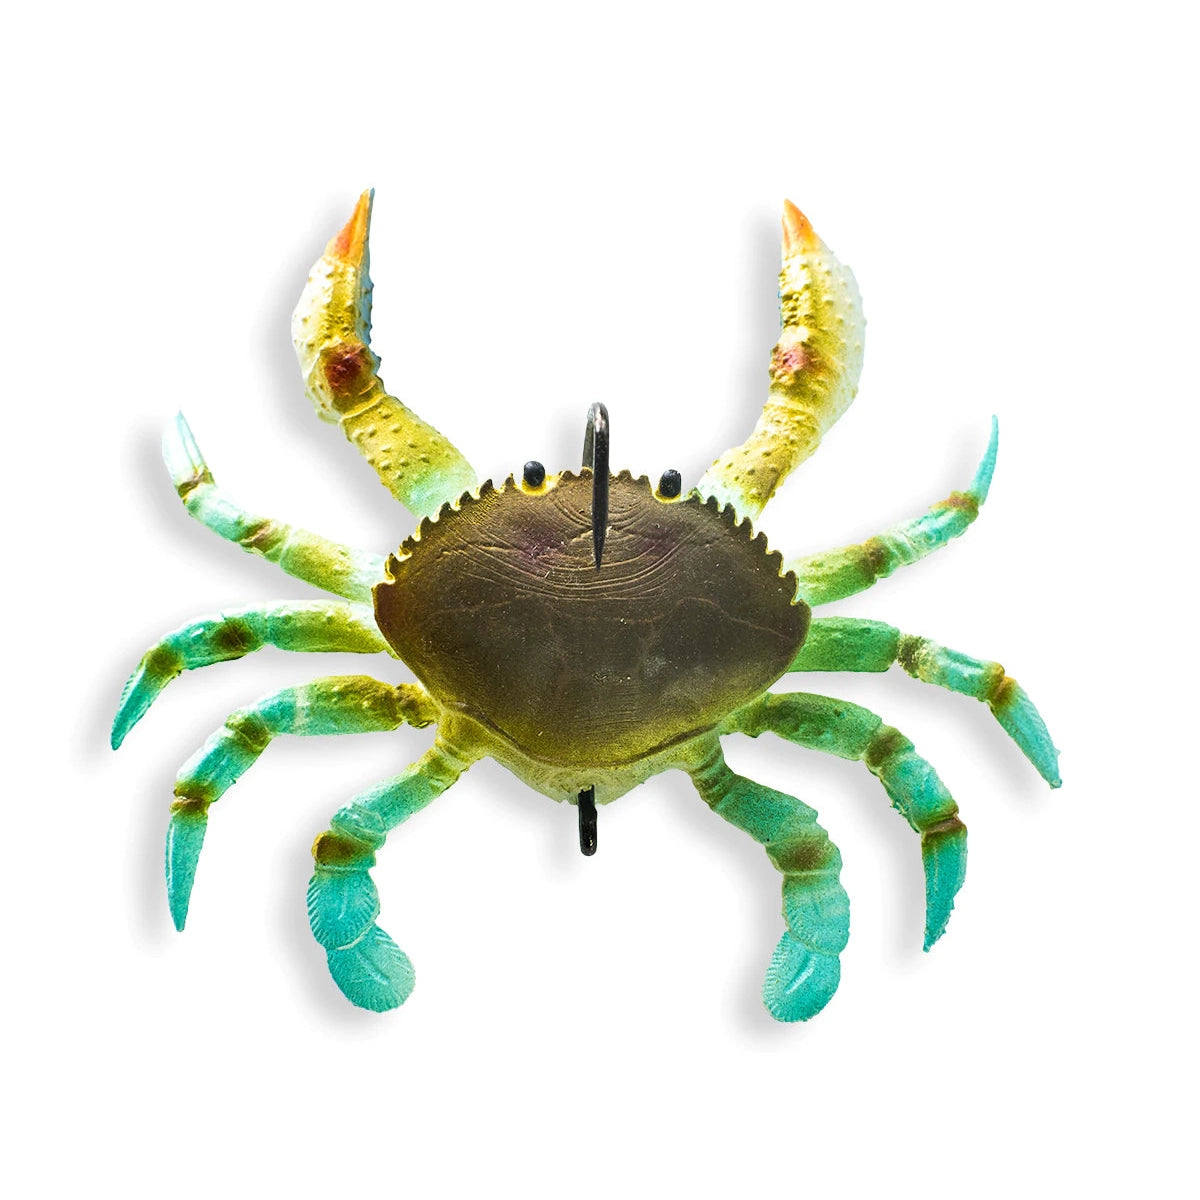 Chasebaits Smash Crab Soft Plastic Lures, Sports Equipment, Fishing on  Carousell